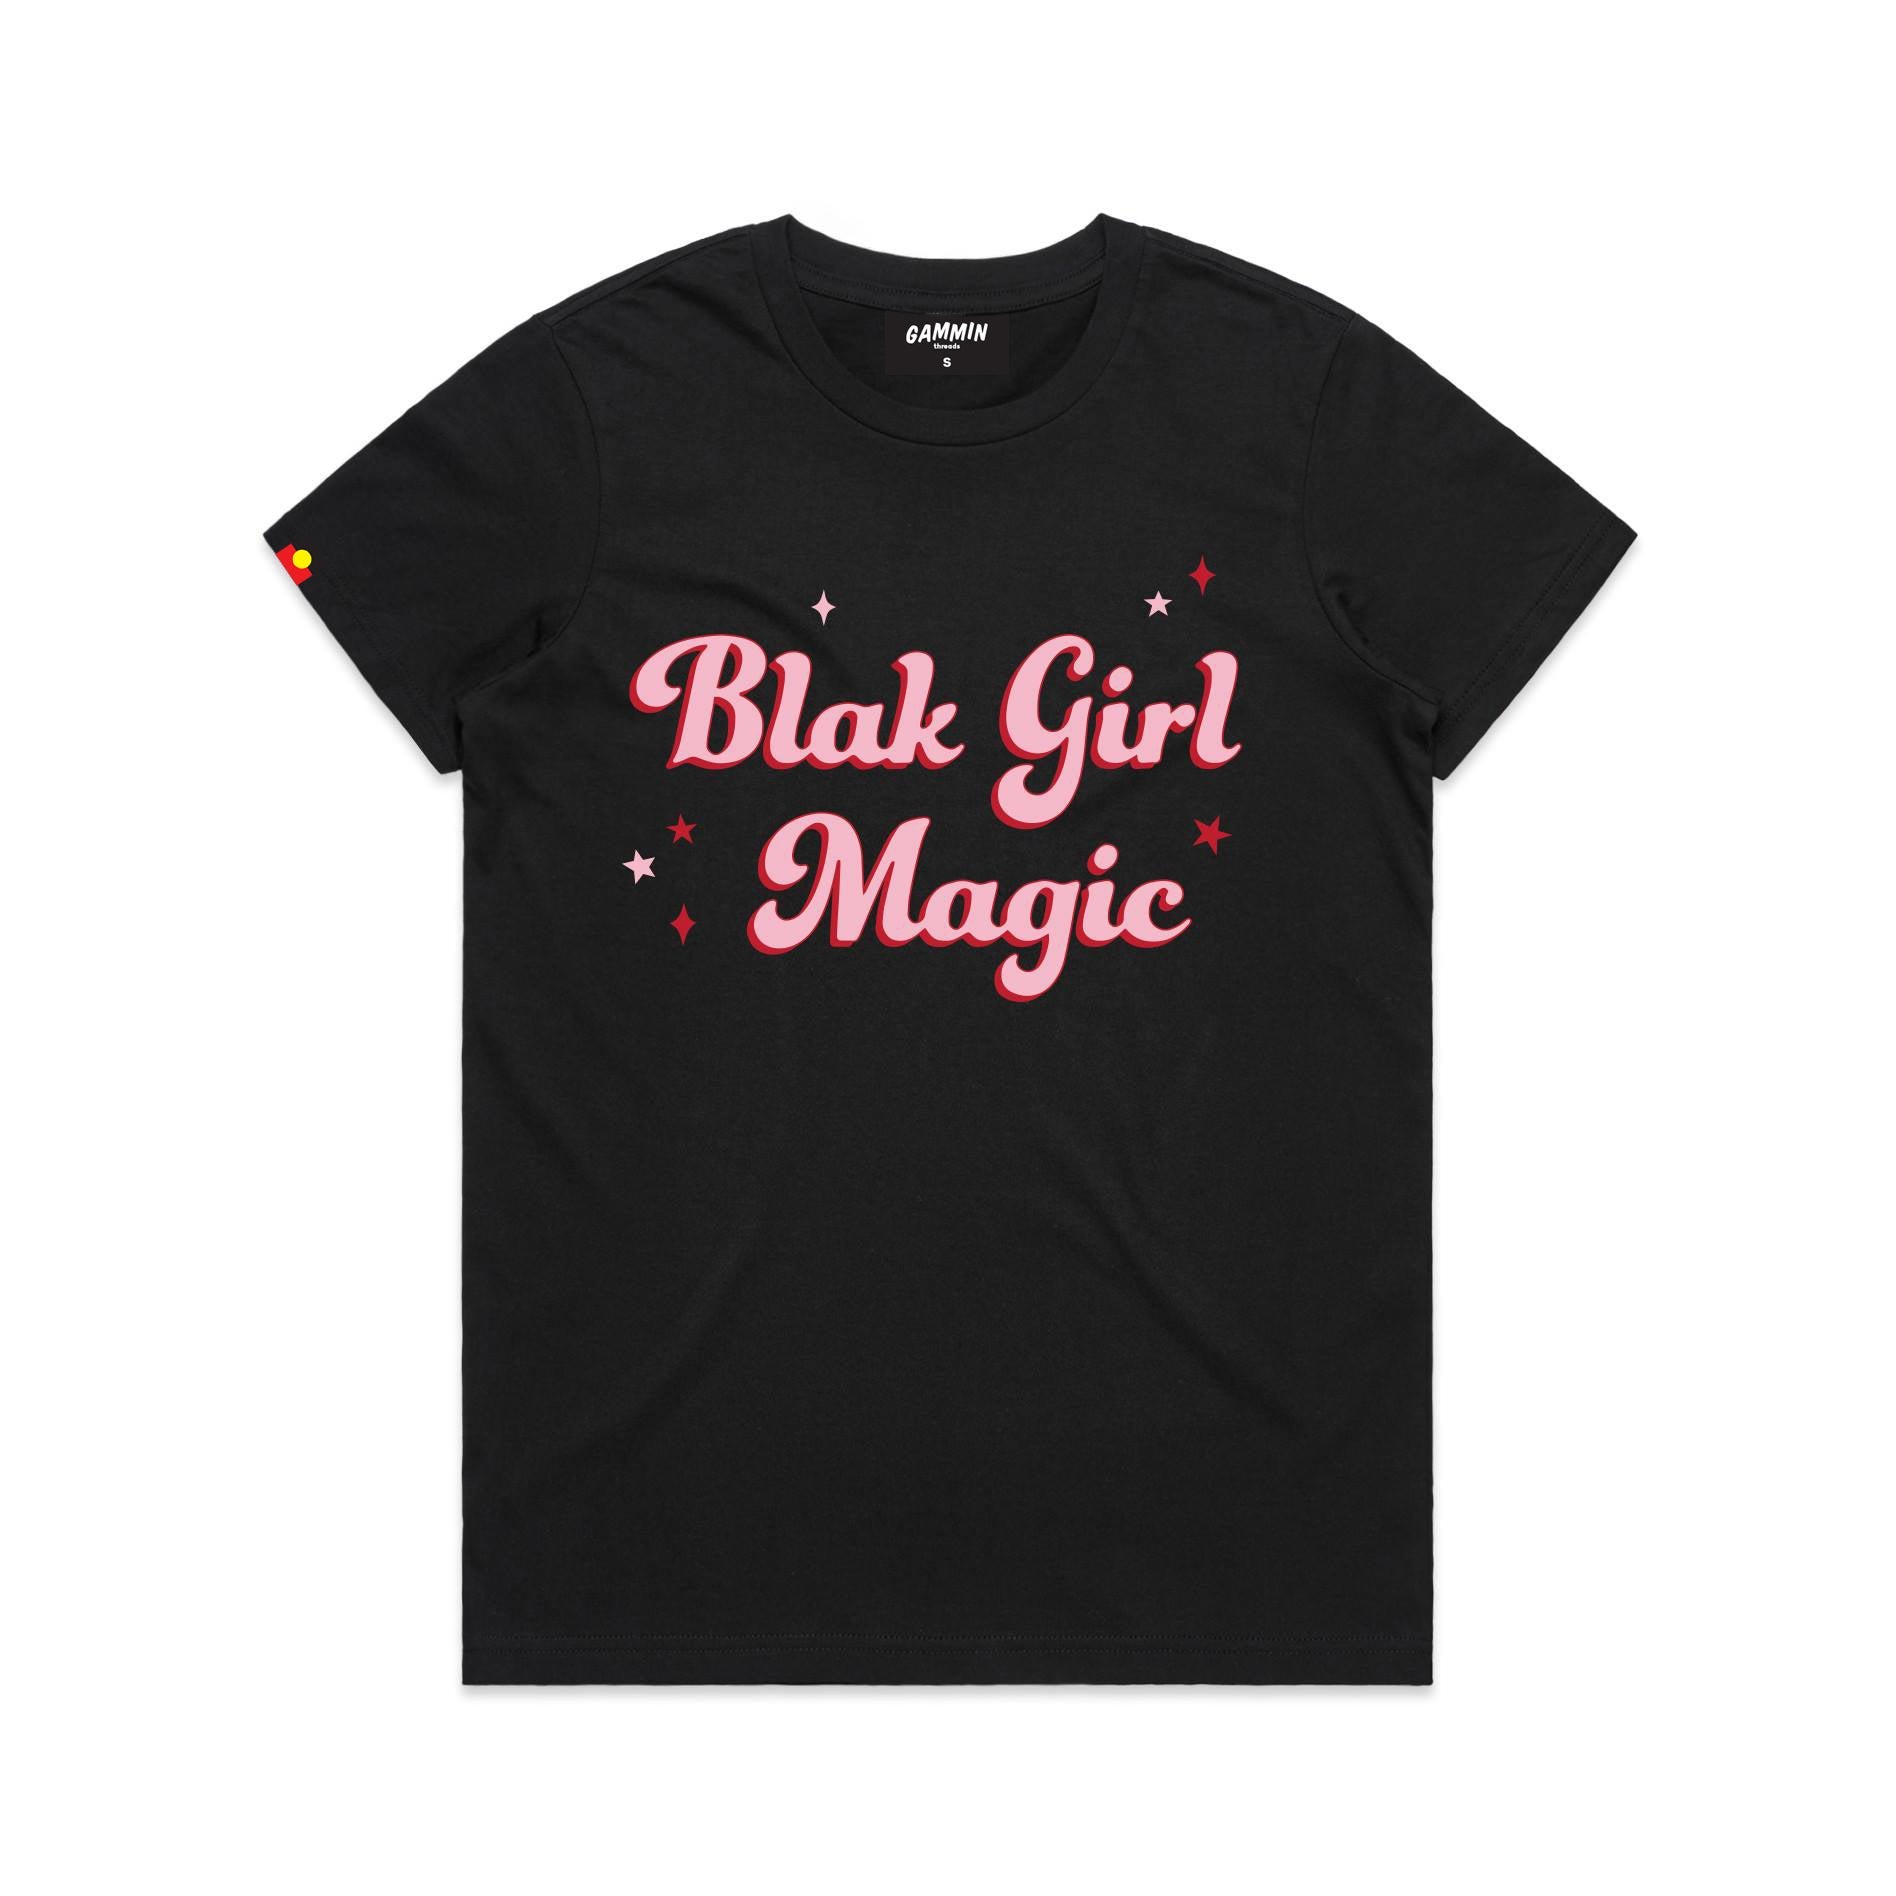 Blak girl magic vintage black tee